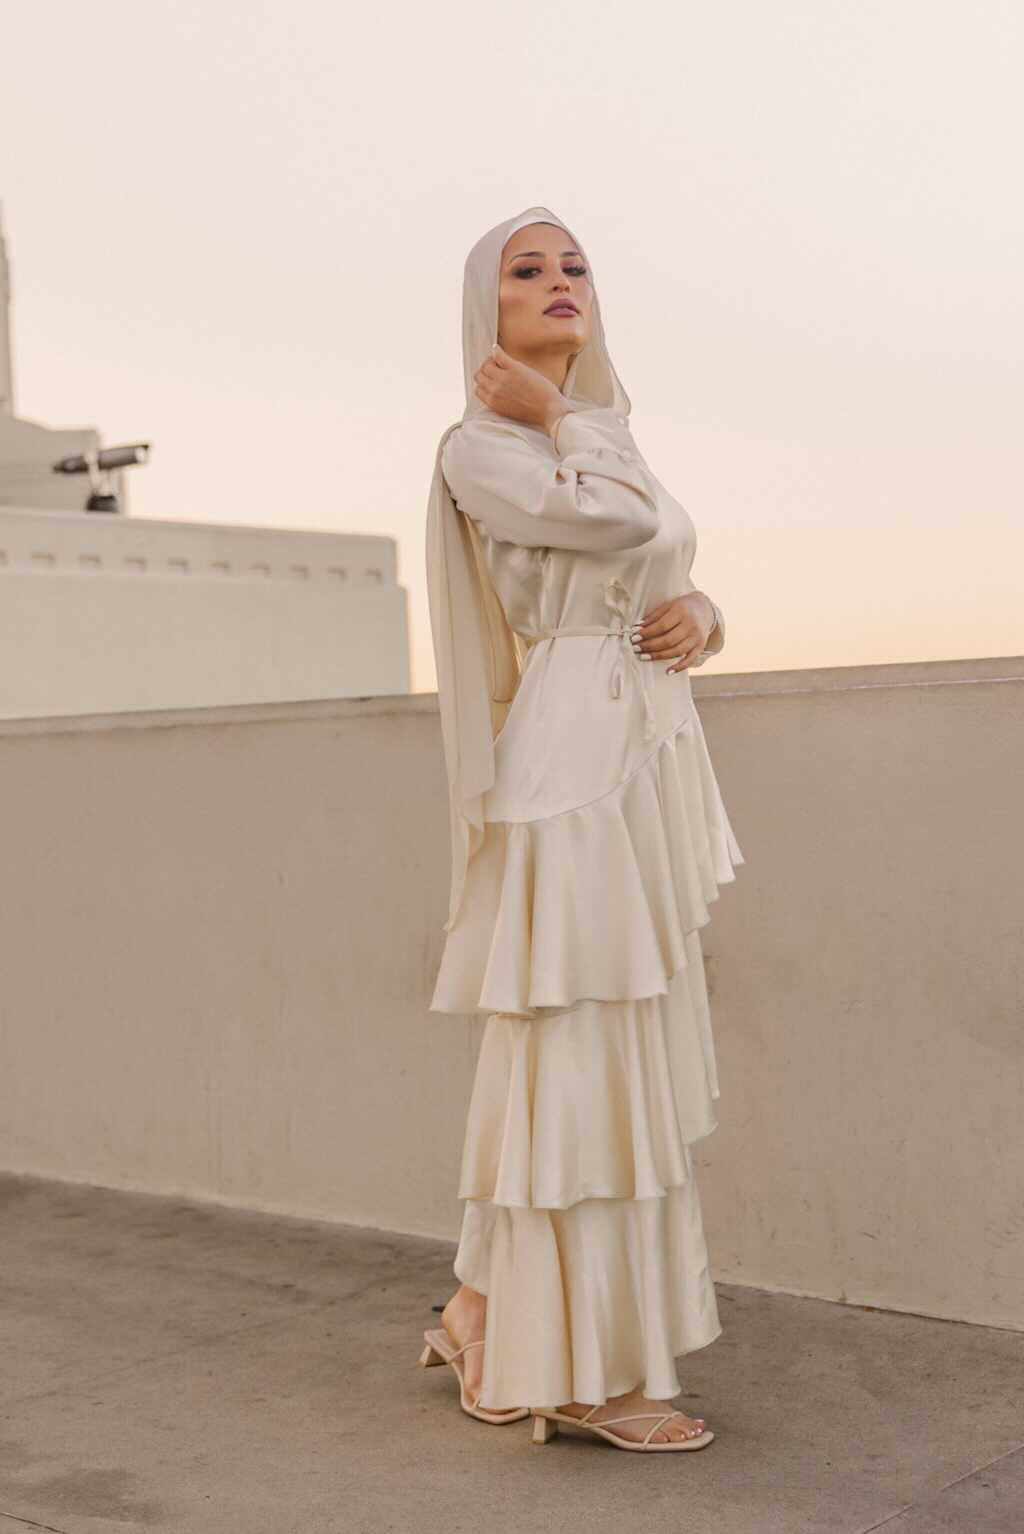 Muslim Two-piece dress traditional muslim clothing| Alibaba.com